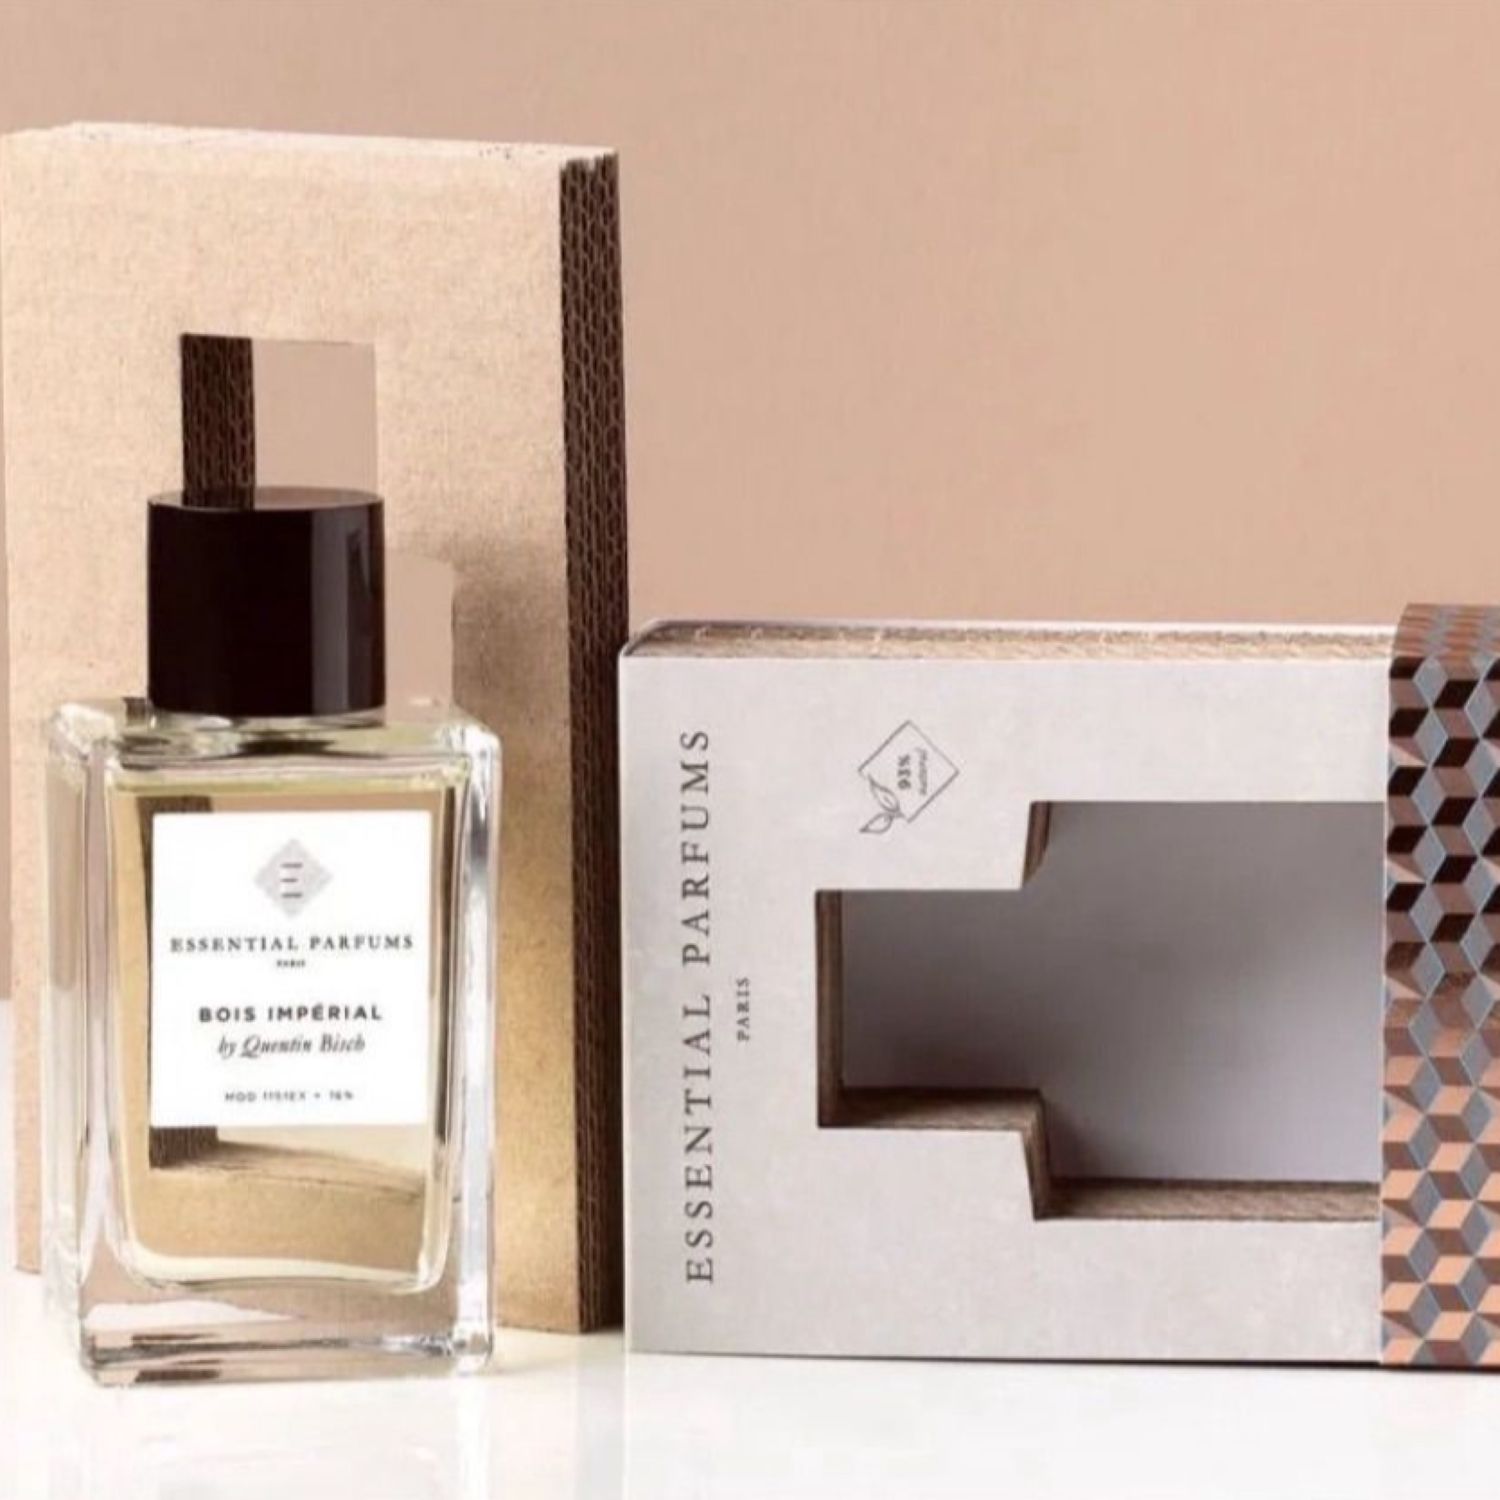 Bois imperial essential parfums limited edition. Бойс Империал Рефилабле.